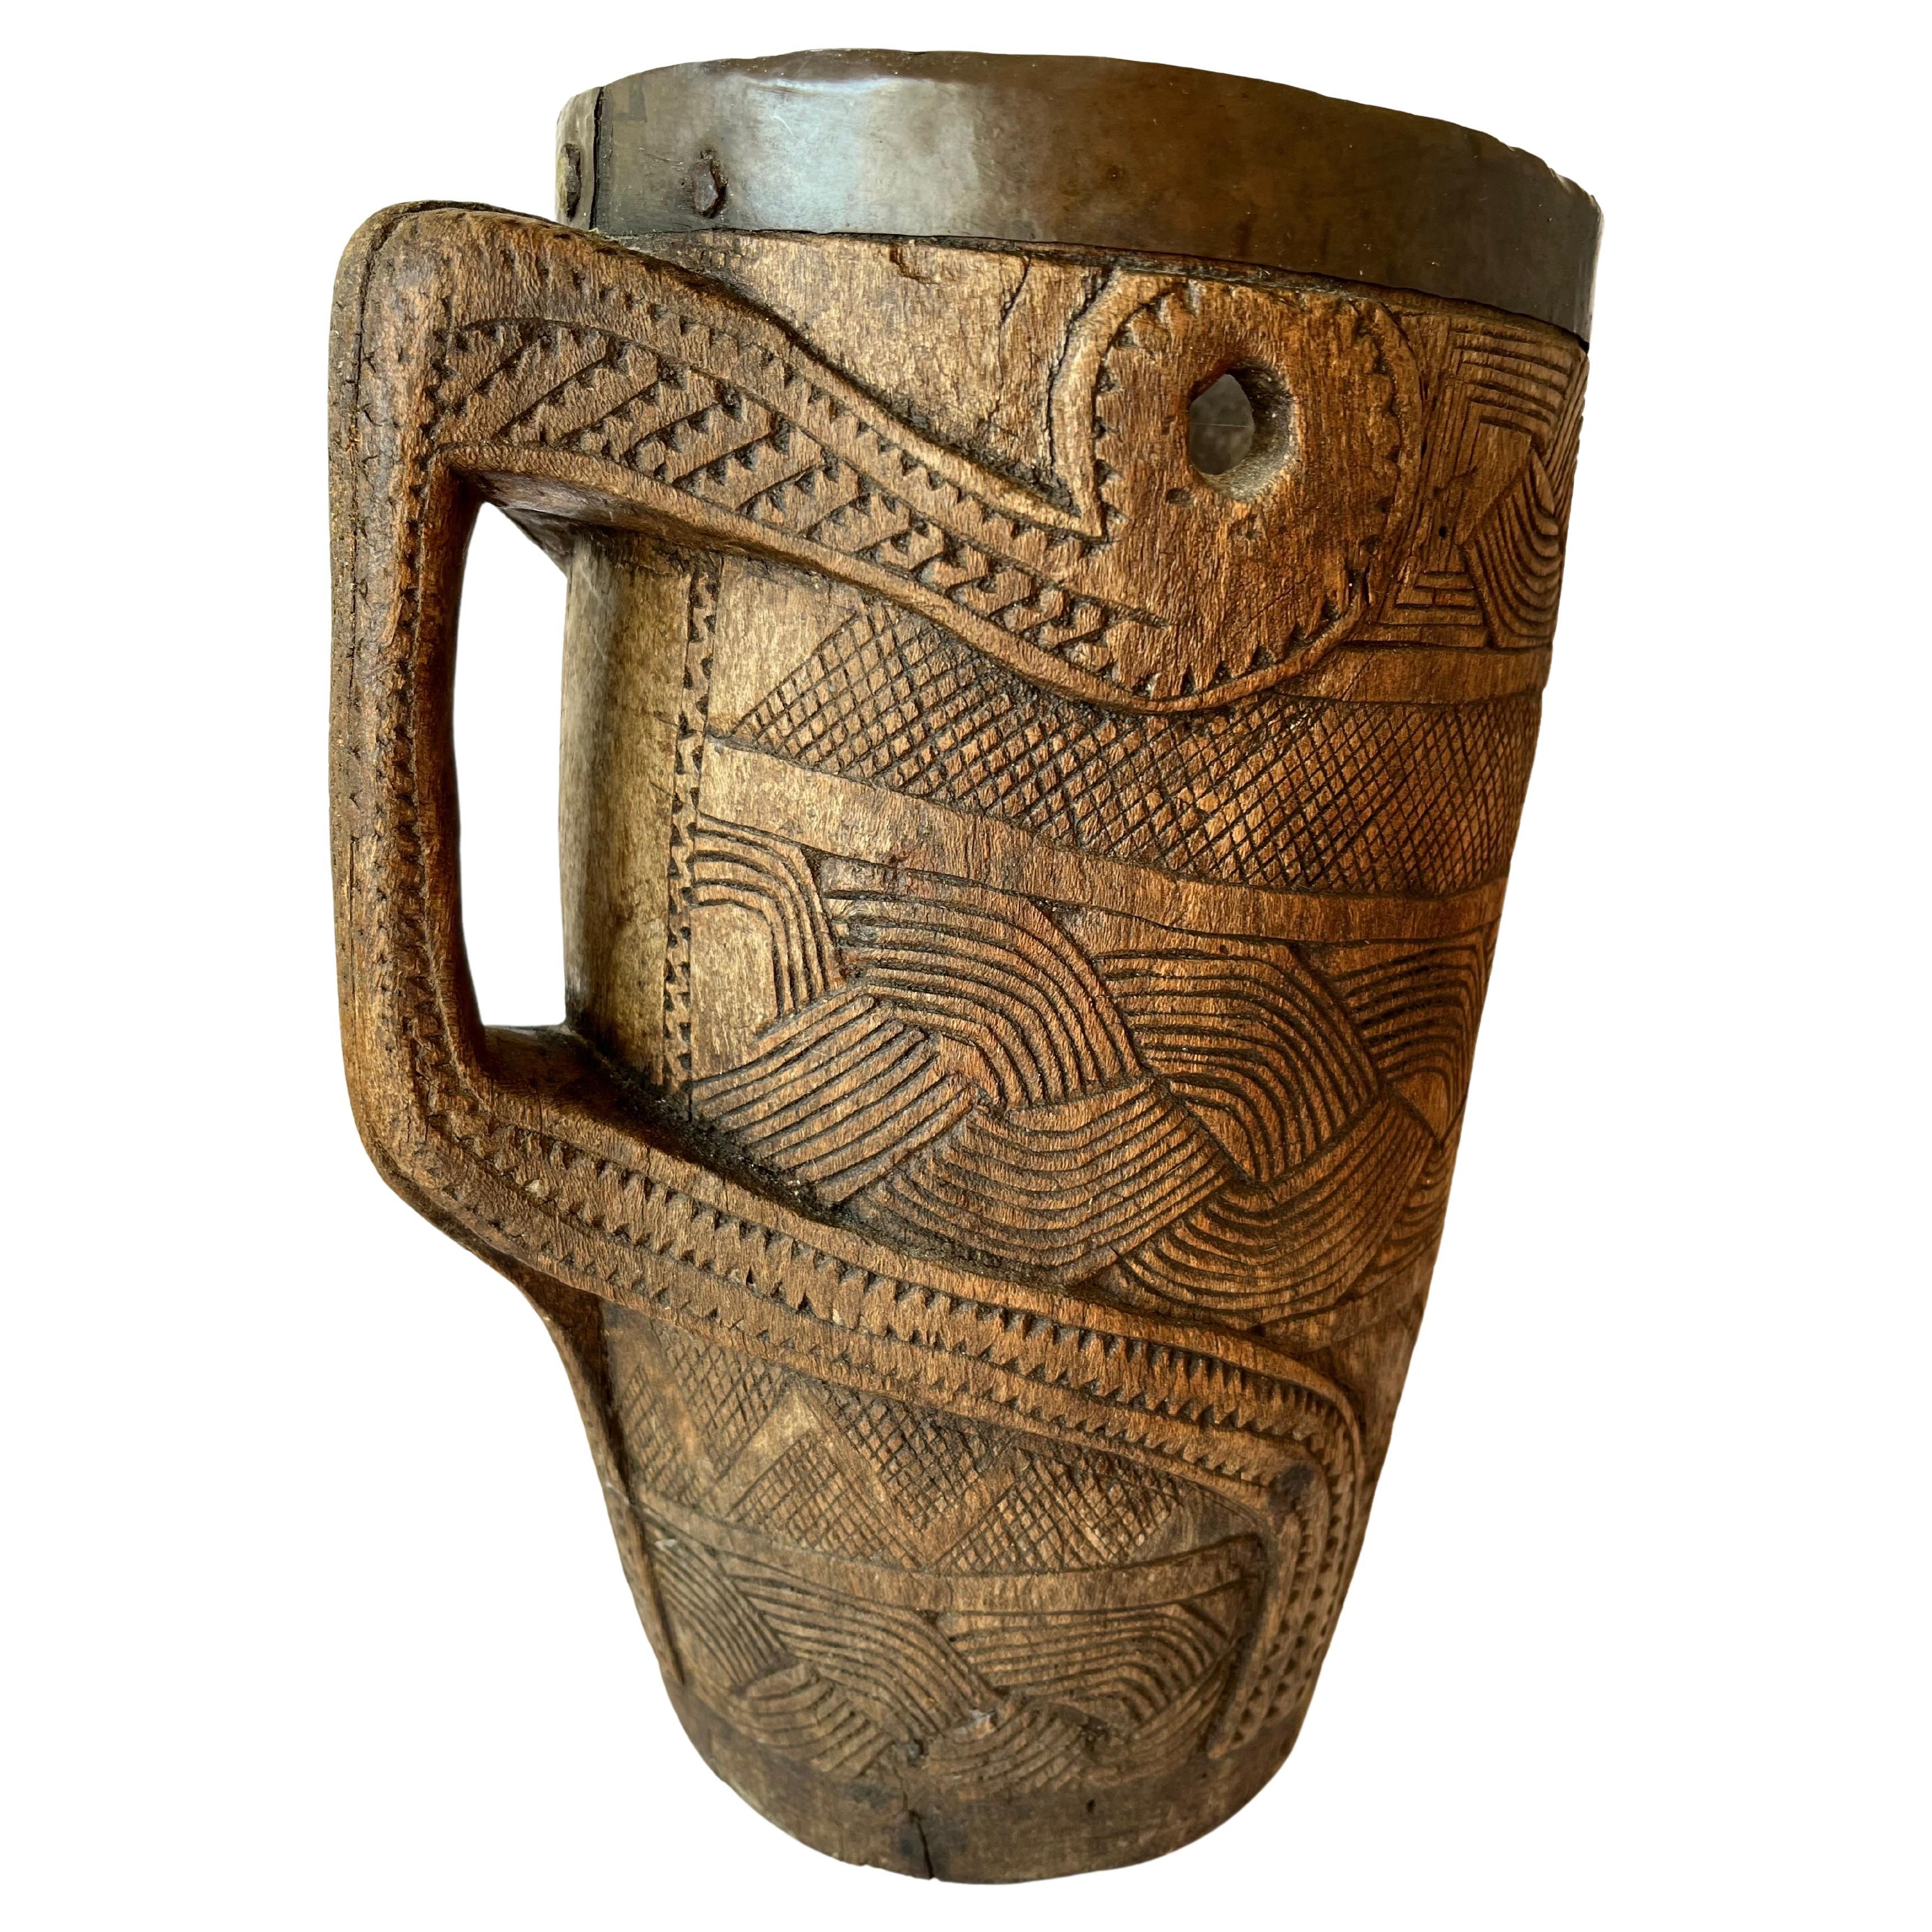 Antic Yak Milk Jar with Handle North Népal Santal Tribe Hand Crafted Hard Wood